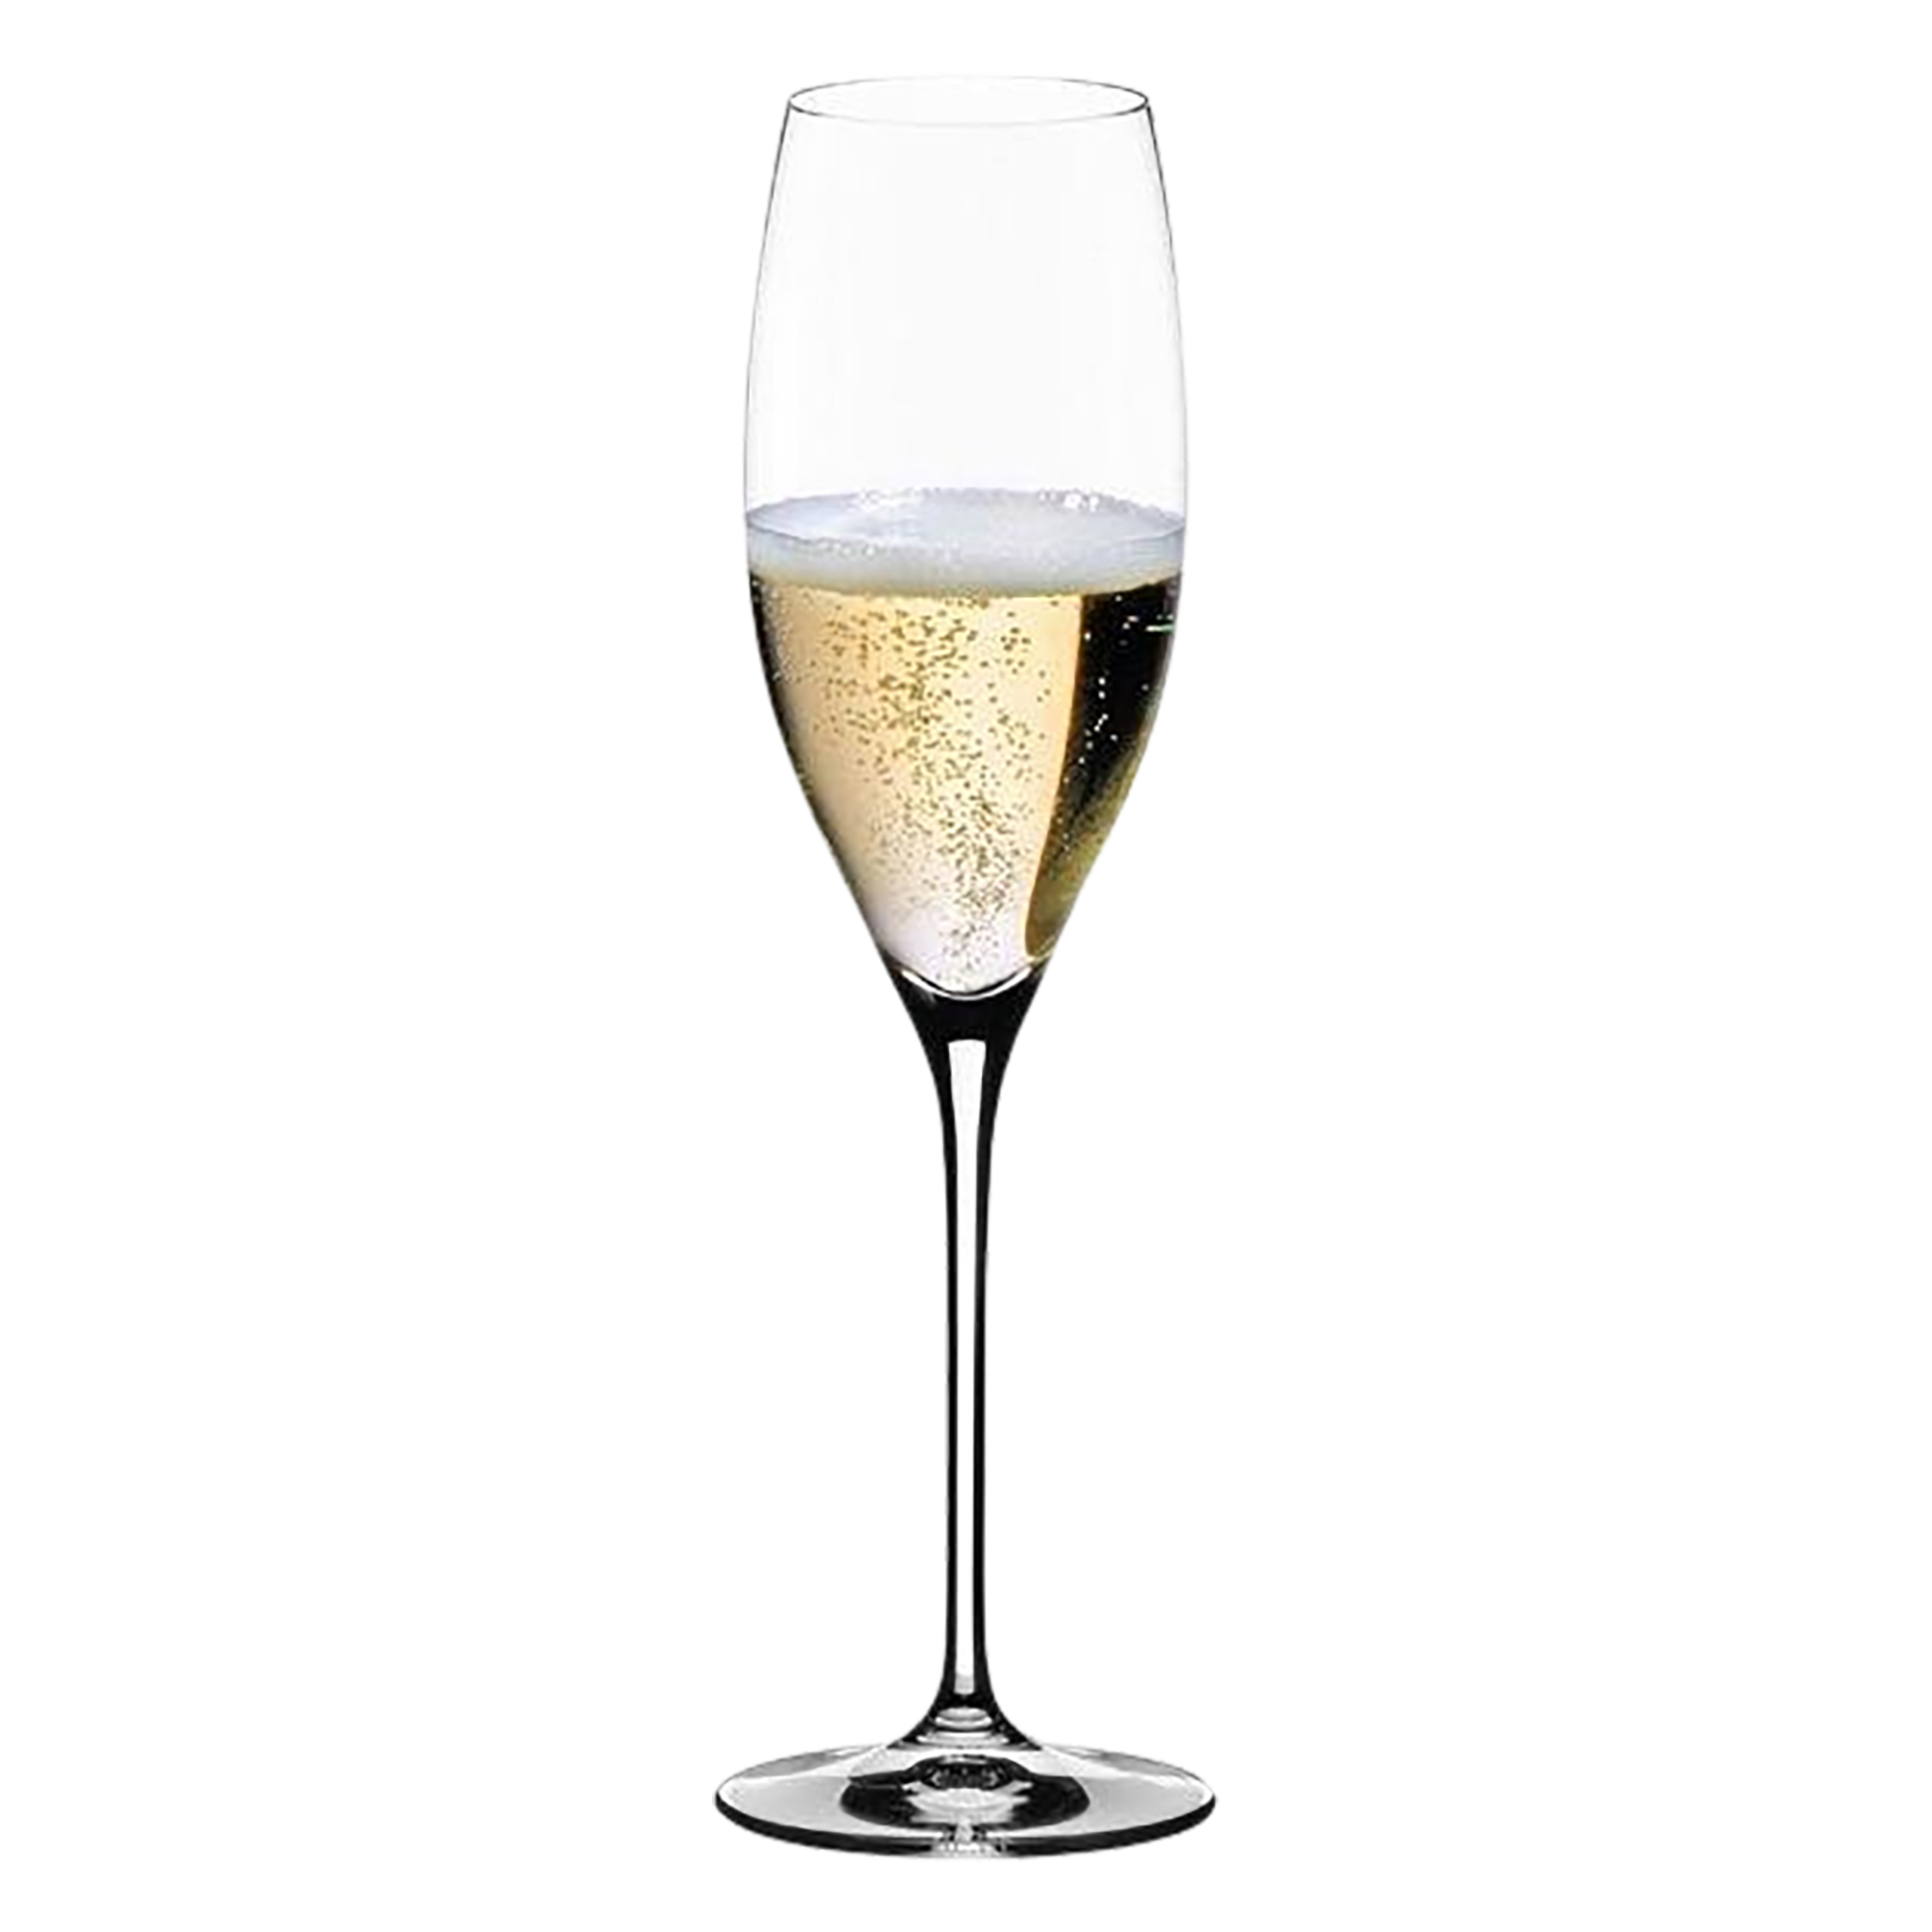  Riedel Exclusive Vinum Extreme Set of 4 Wine Glasses